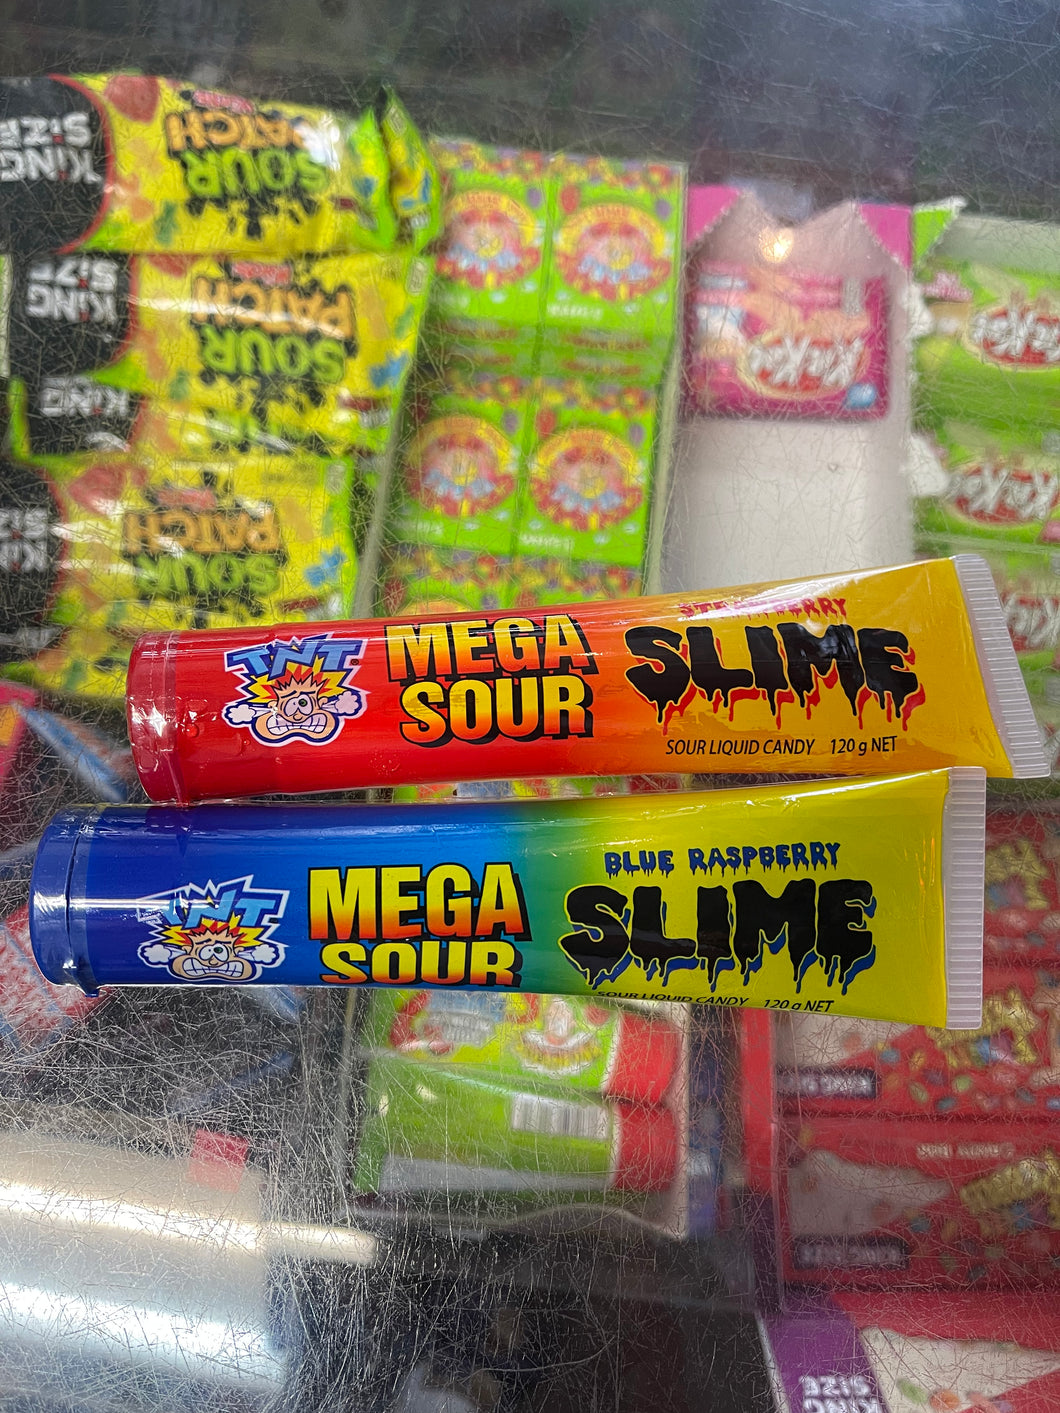 Mega Sour Slime